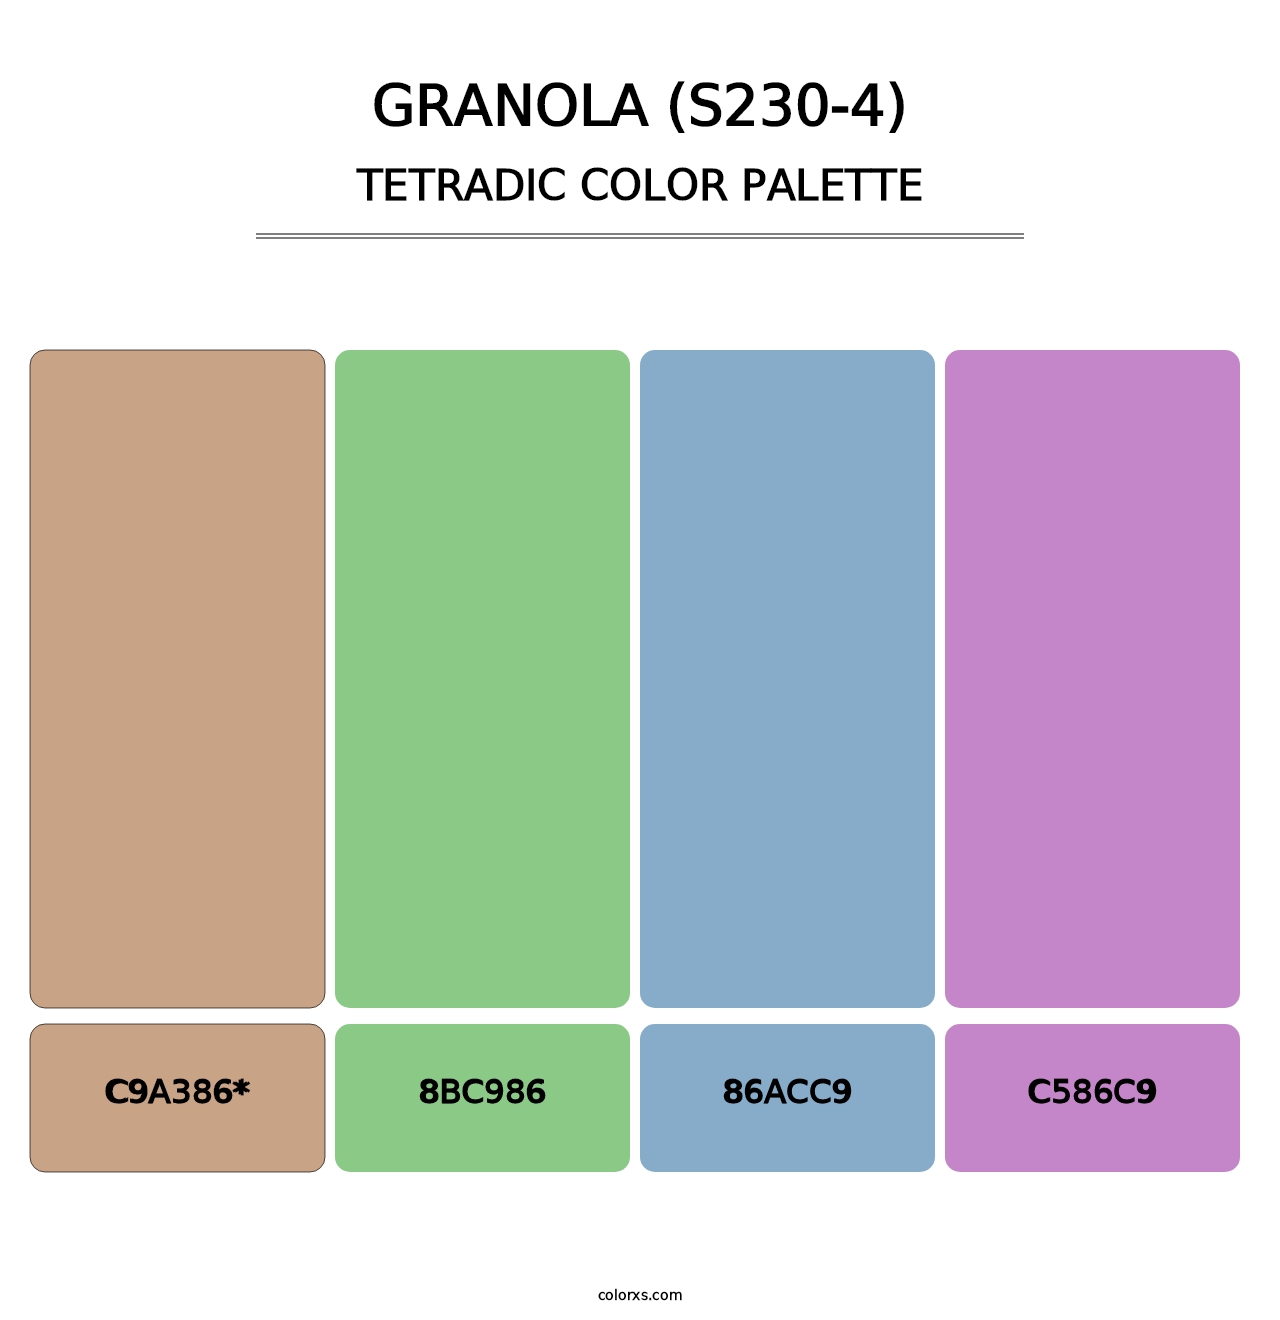 Granola (S230-4) - Tetradic Color Palette